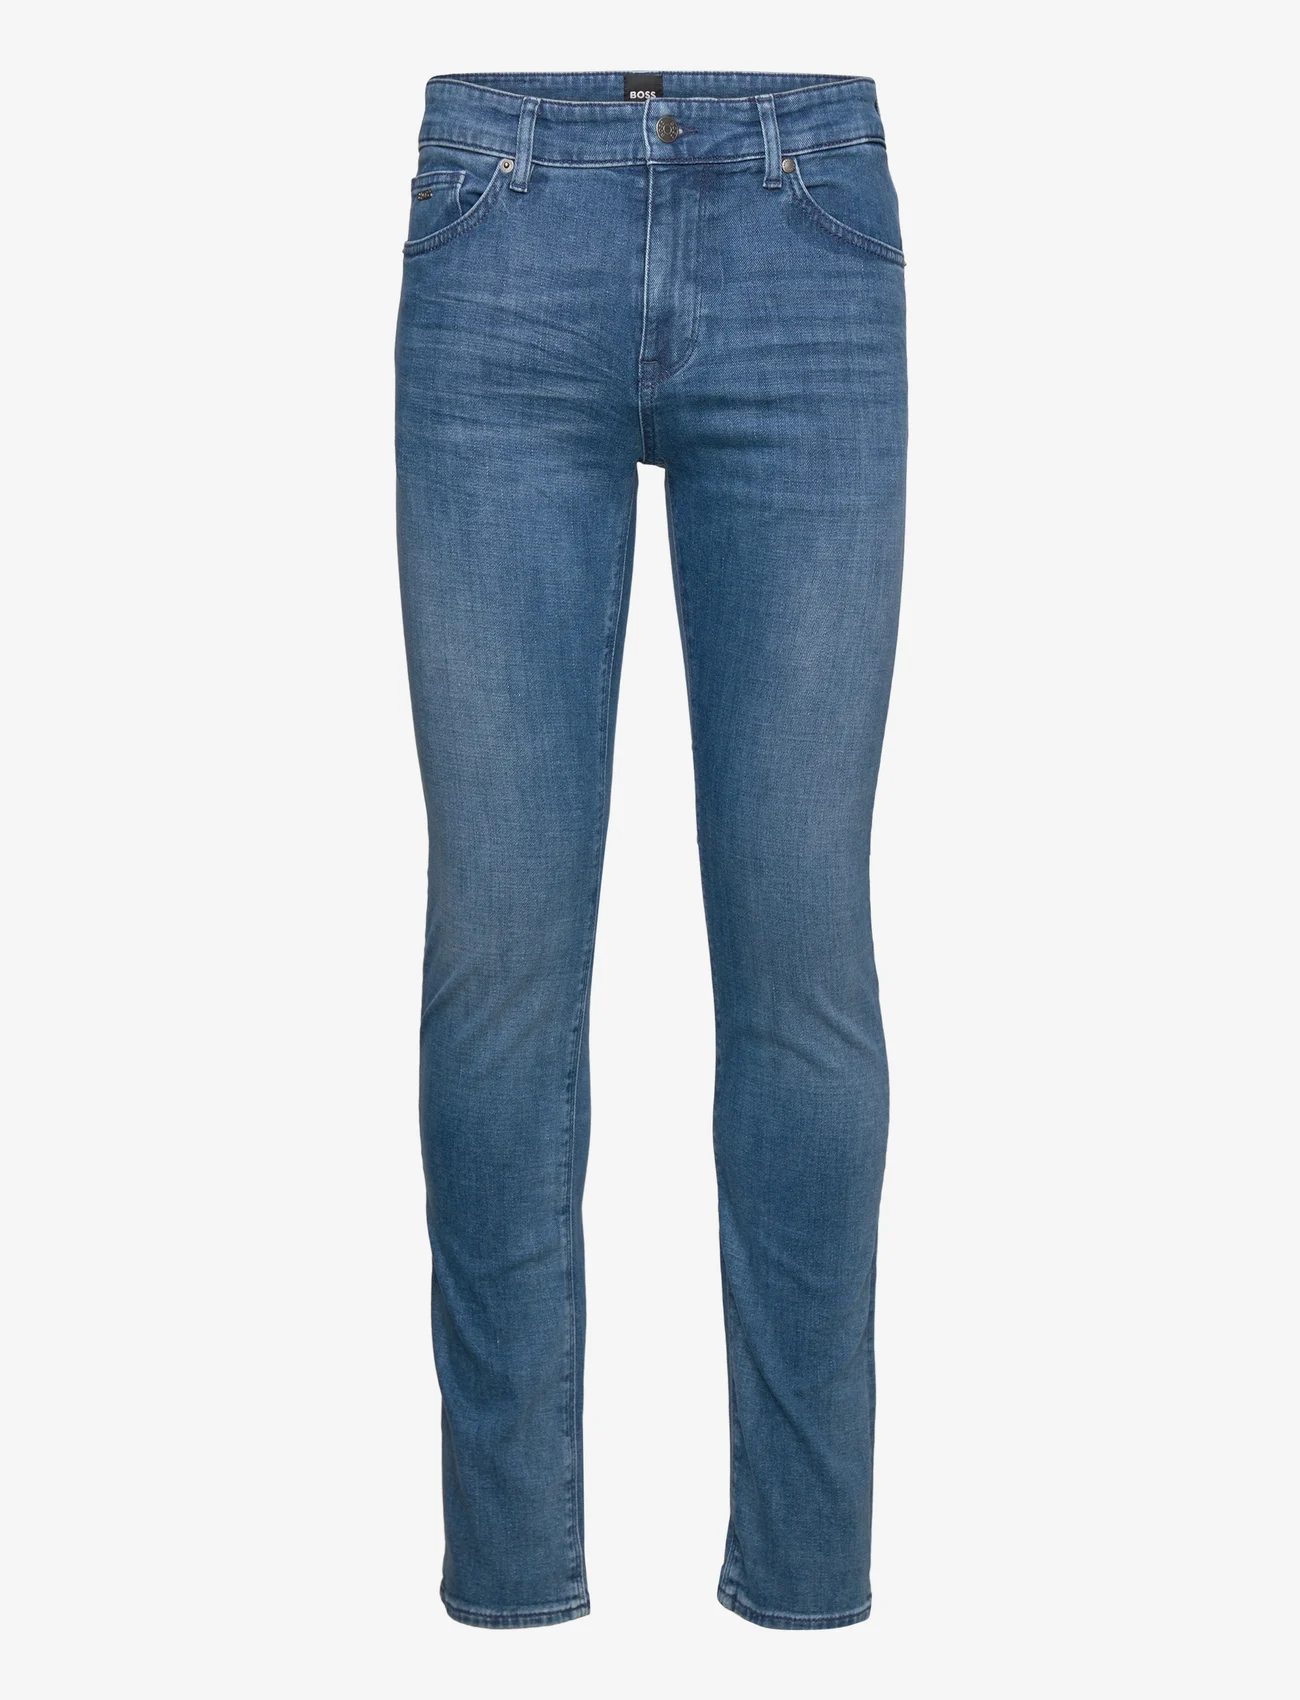 BOSS - Maine3 - slim jeans - medium blue - 0